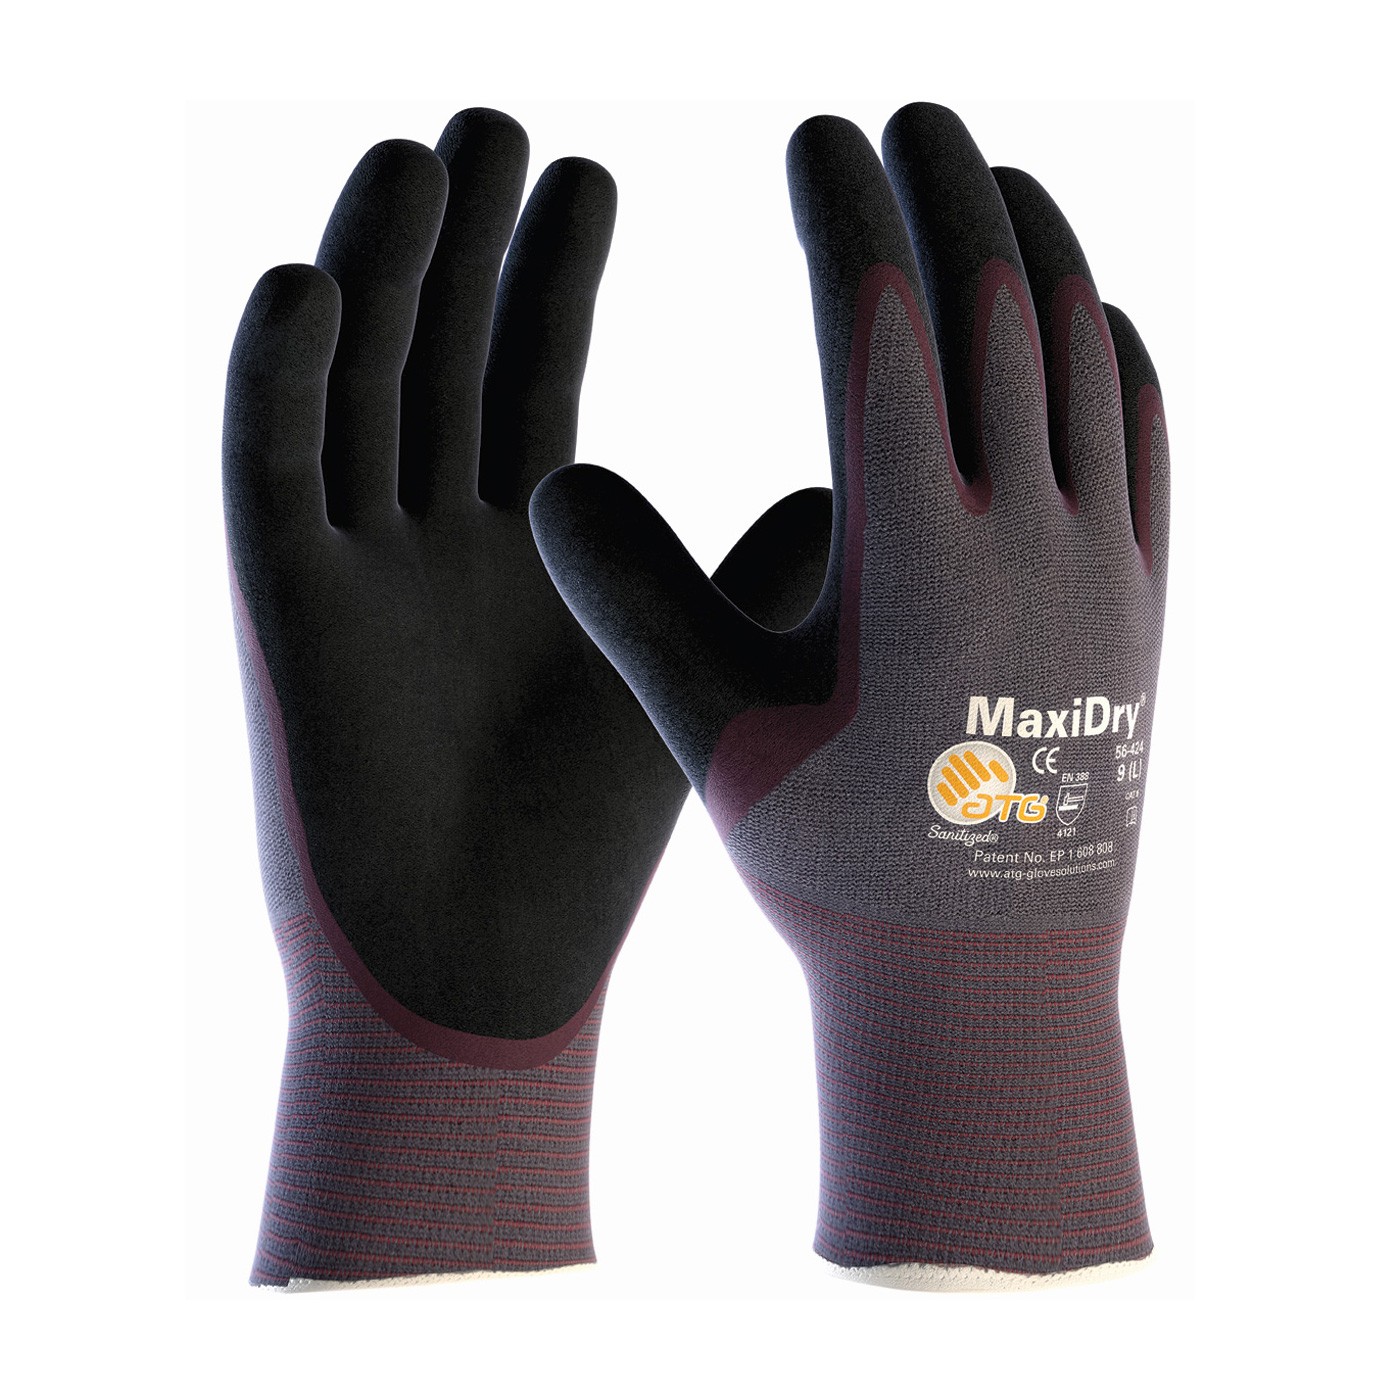 Glove "Maxidry" Coated Palm & Finger XLarge 6DZPR/CS